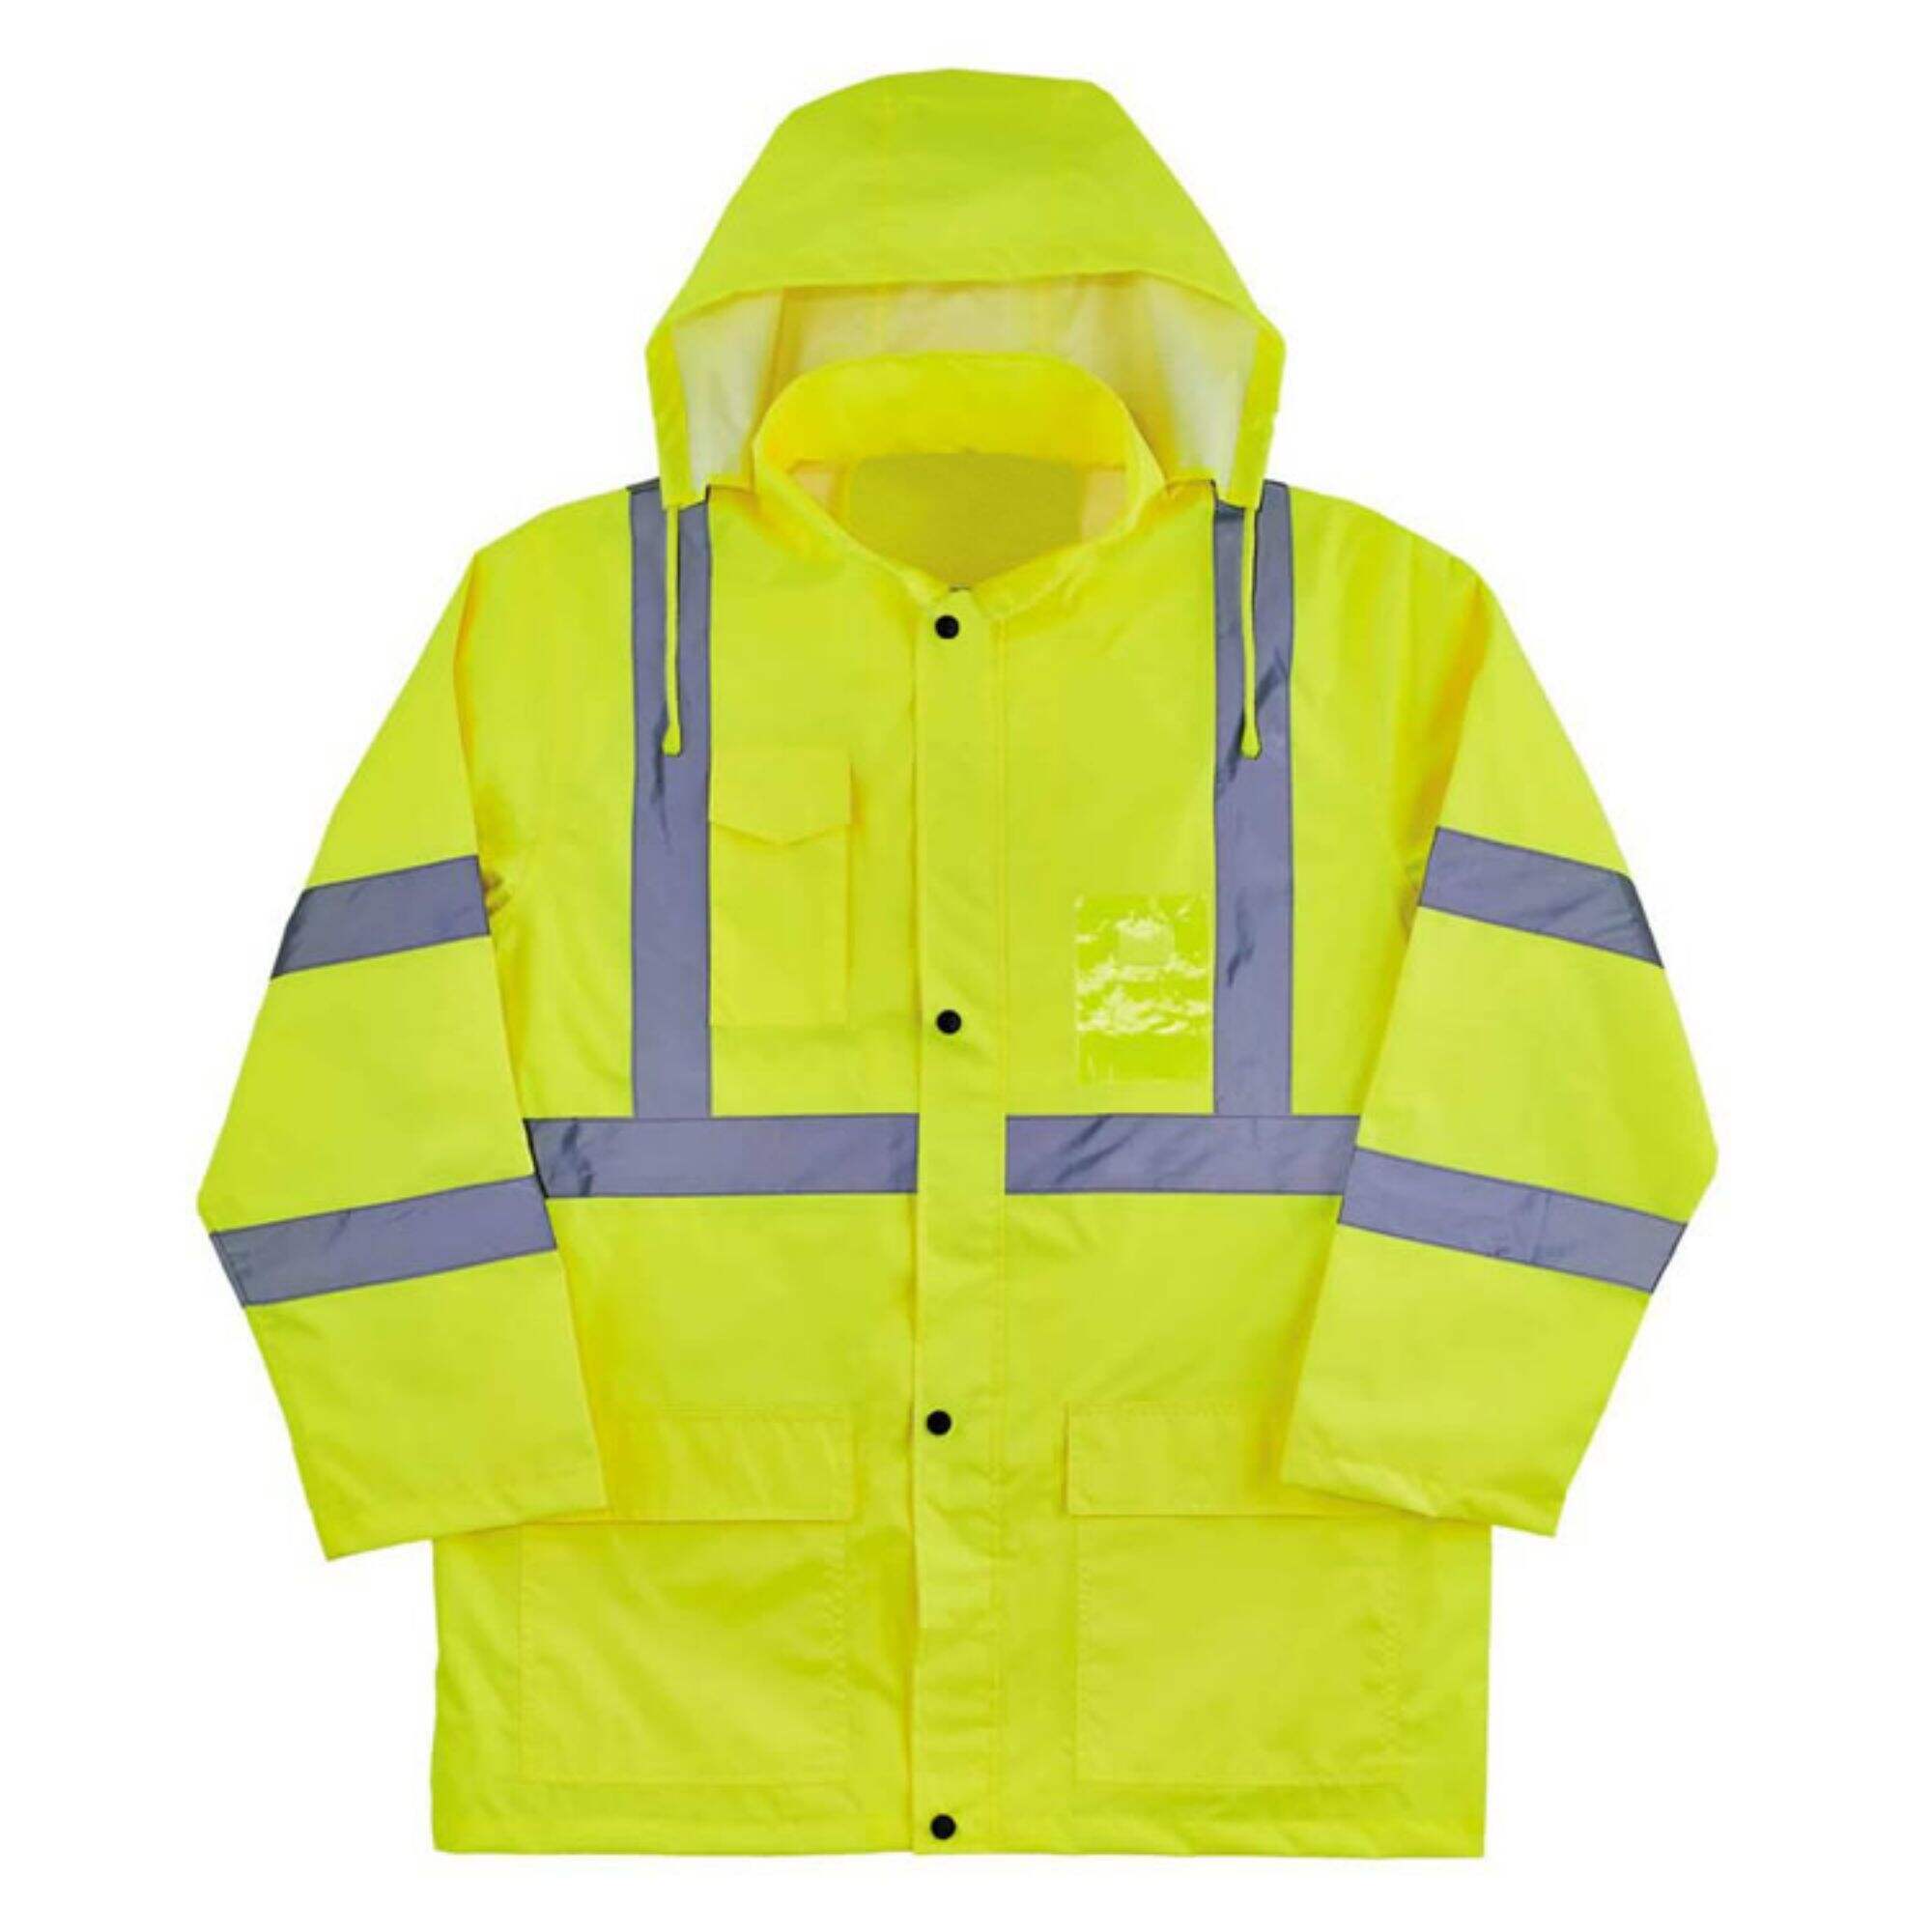 ANSI Class 3 Hi Vis Reflective  Long Sleeves Suit Waterproof Safety Work Raincoat  